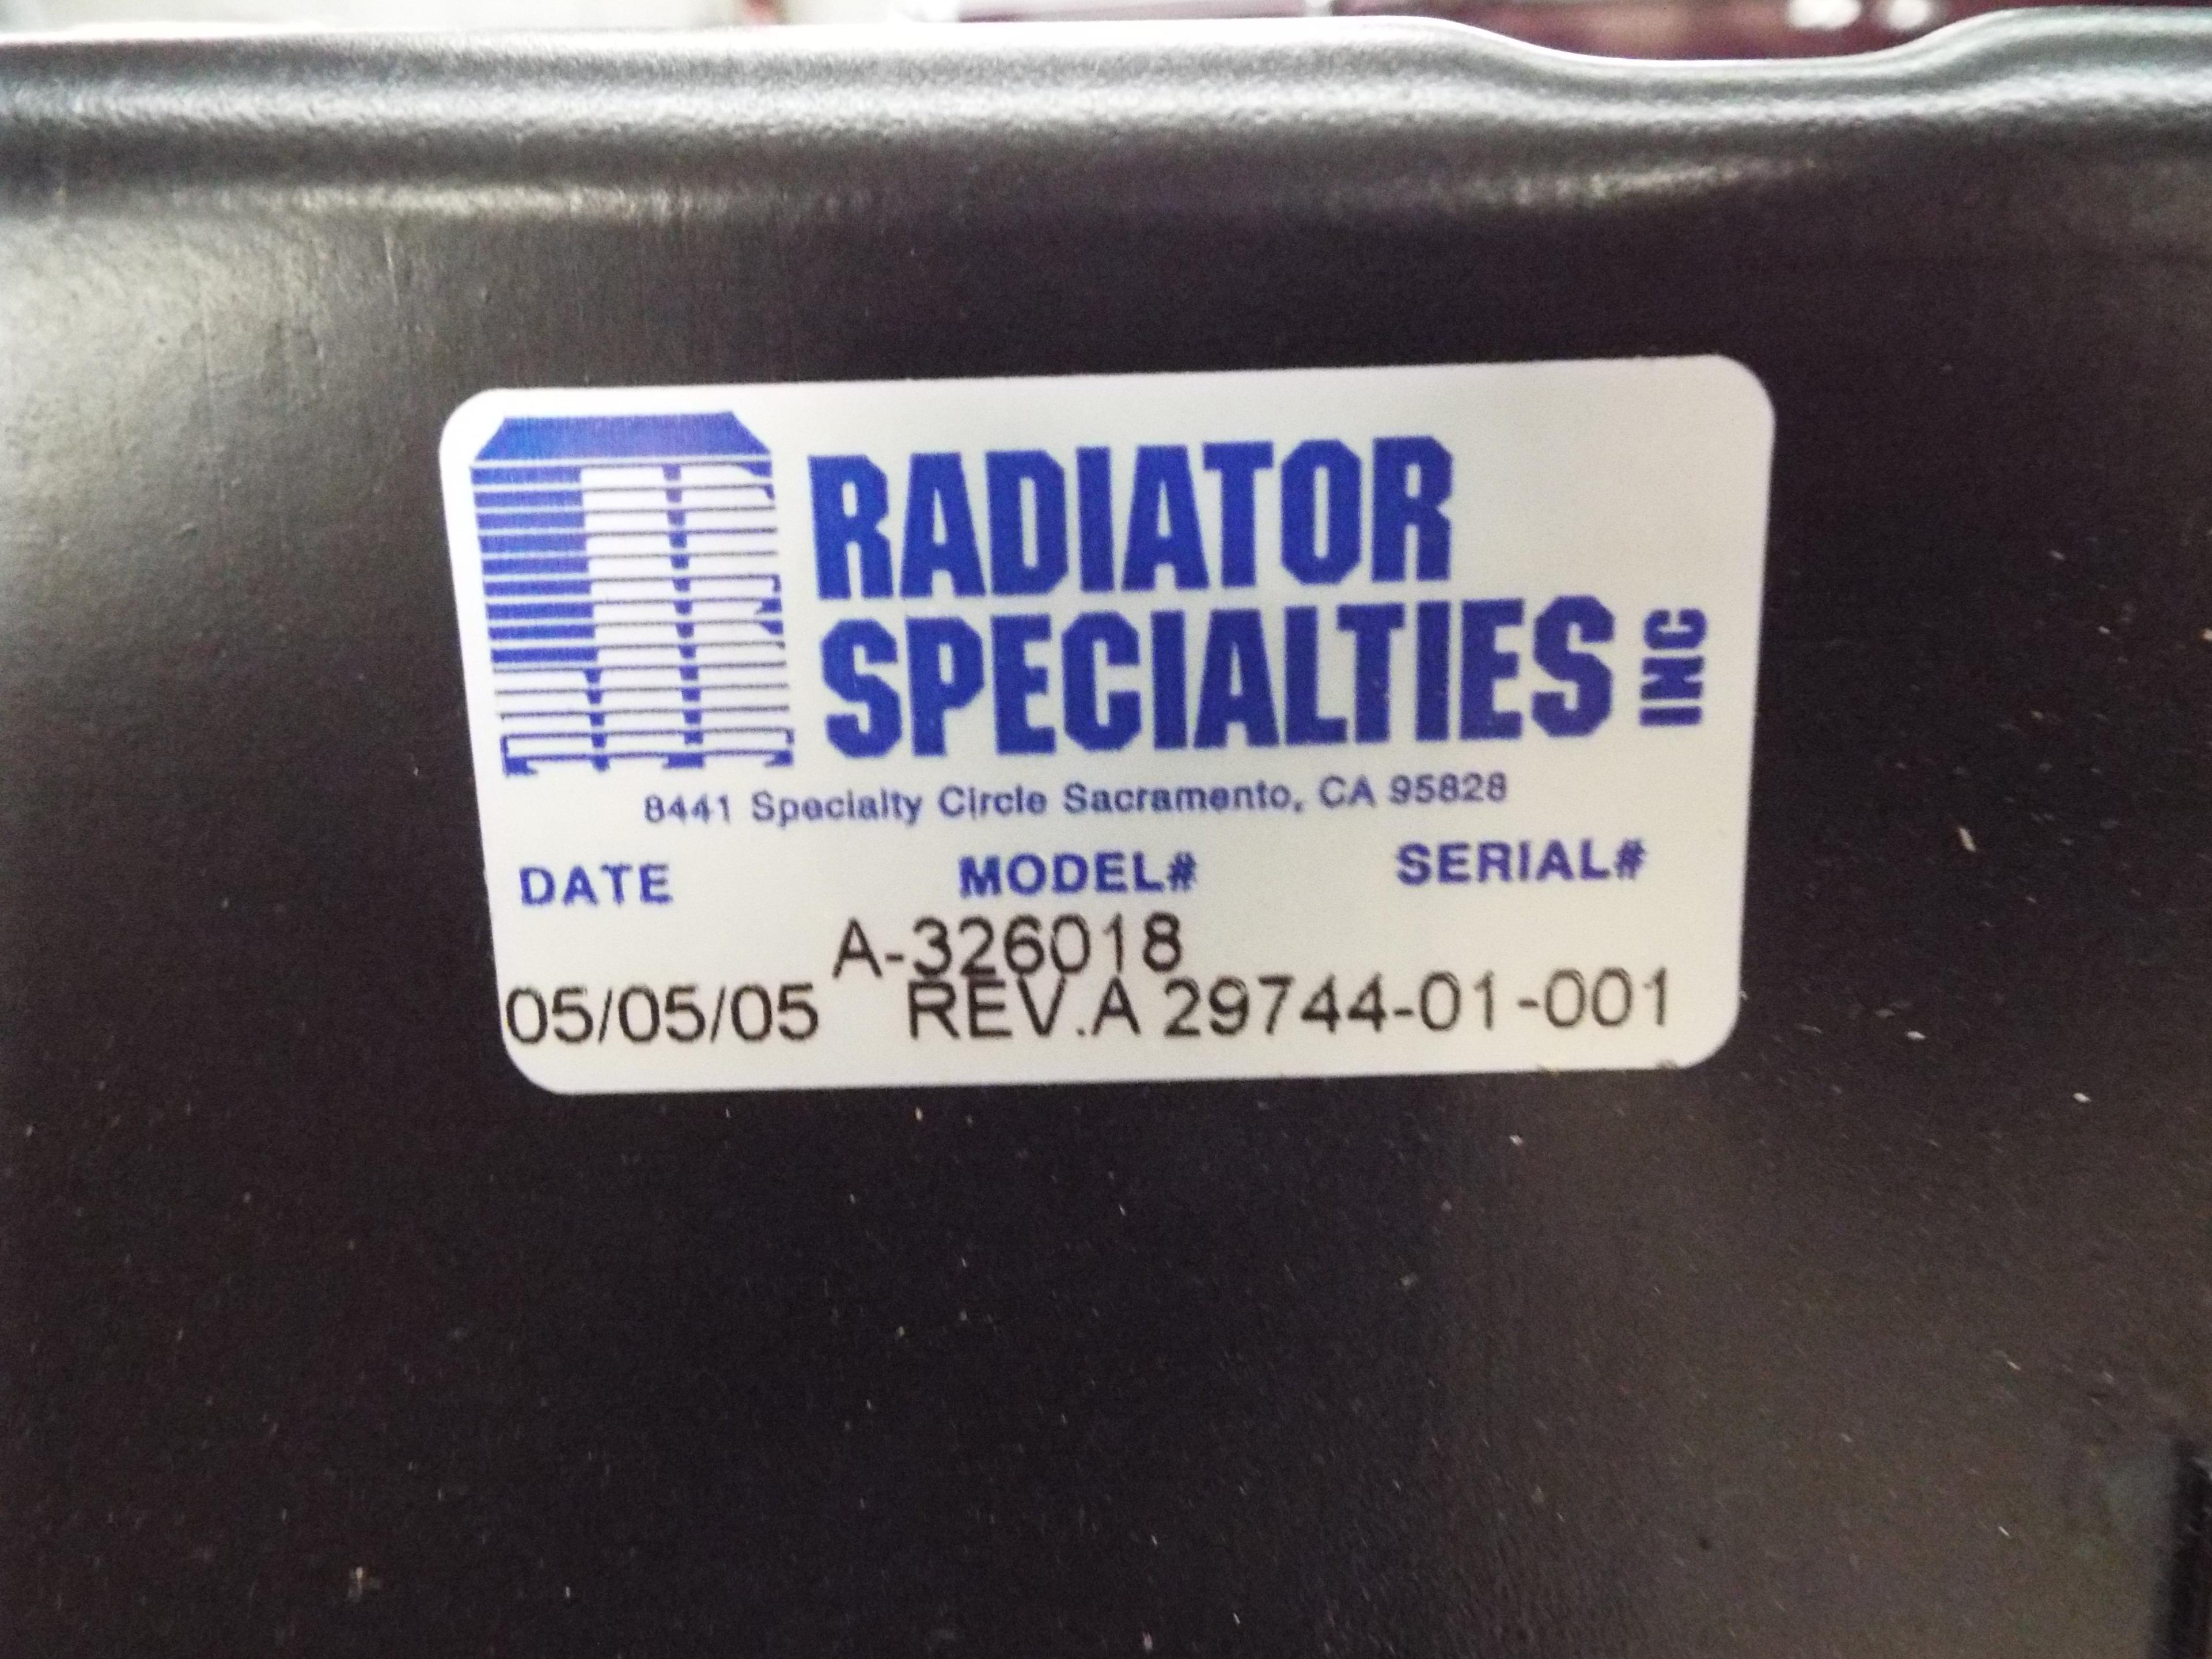 New 2005 Radiator Specialties